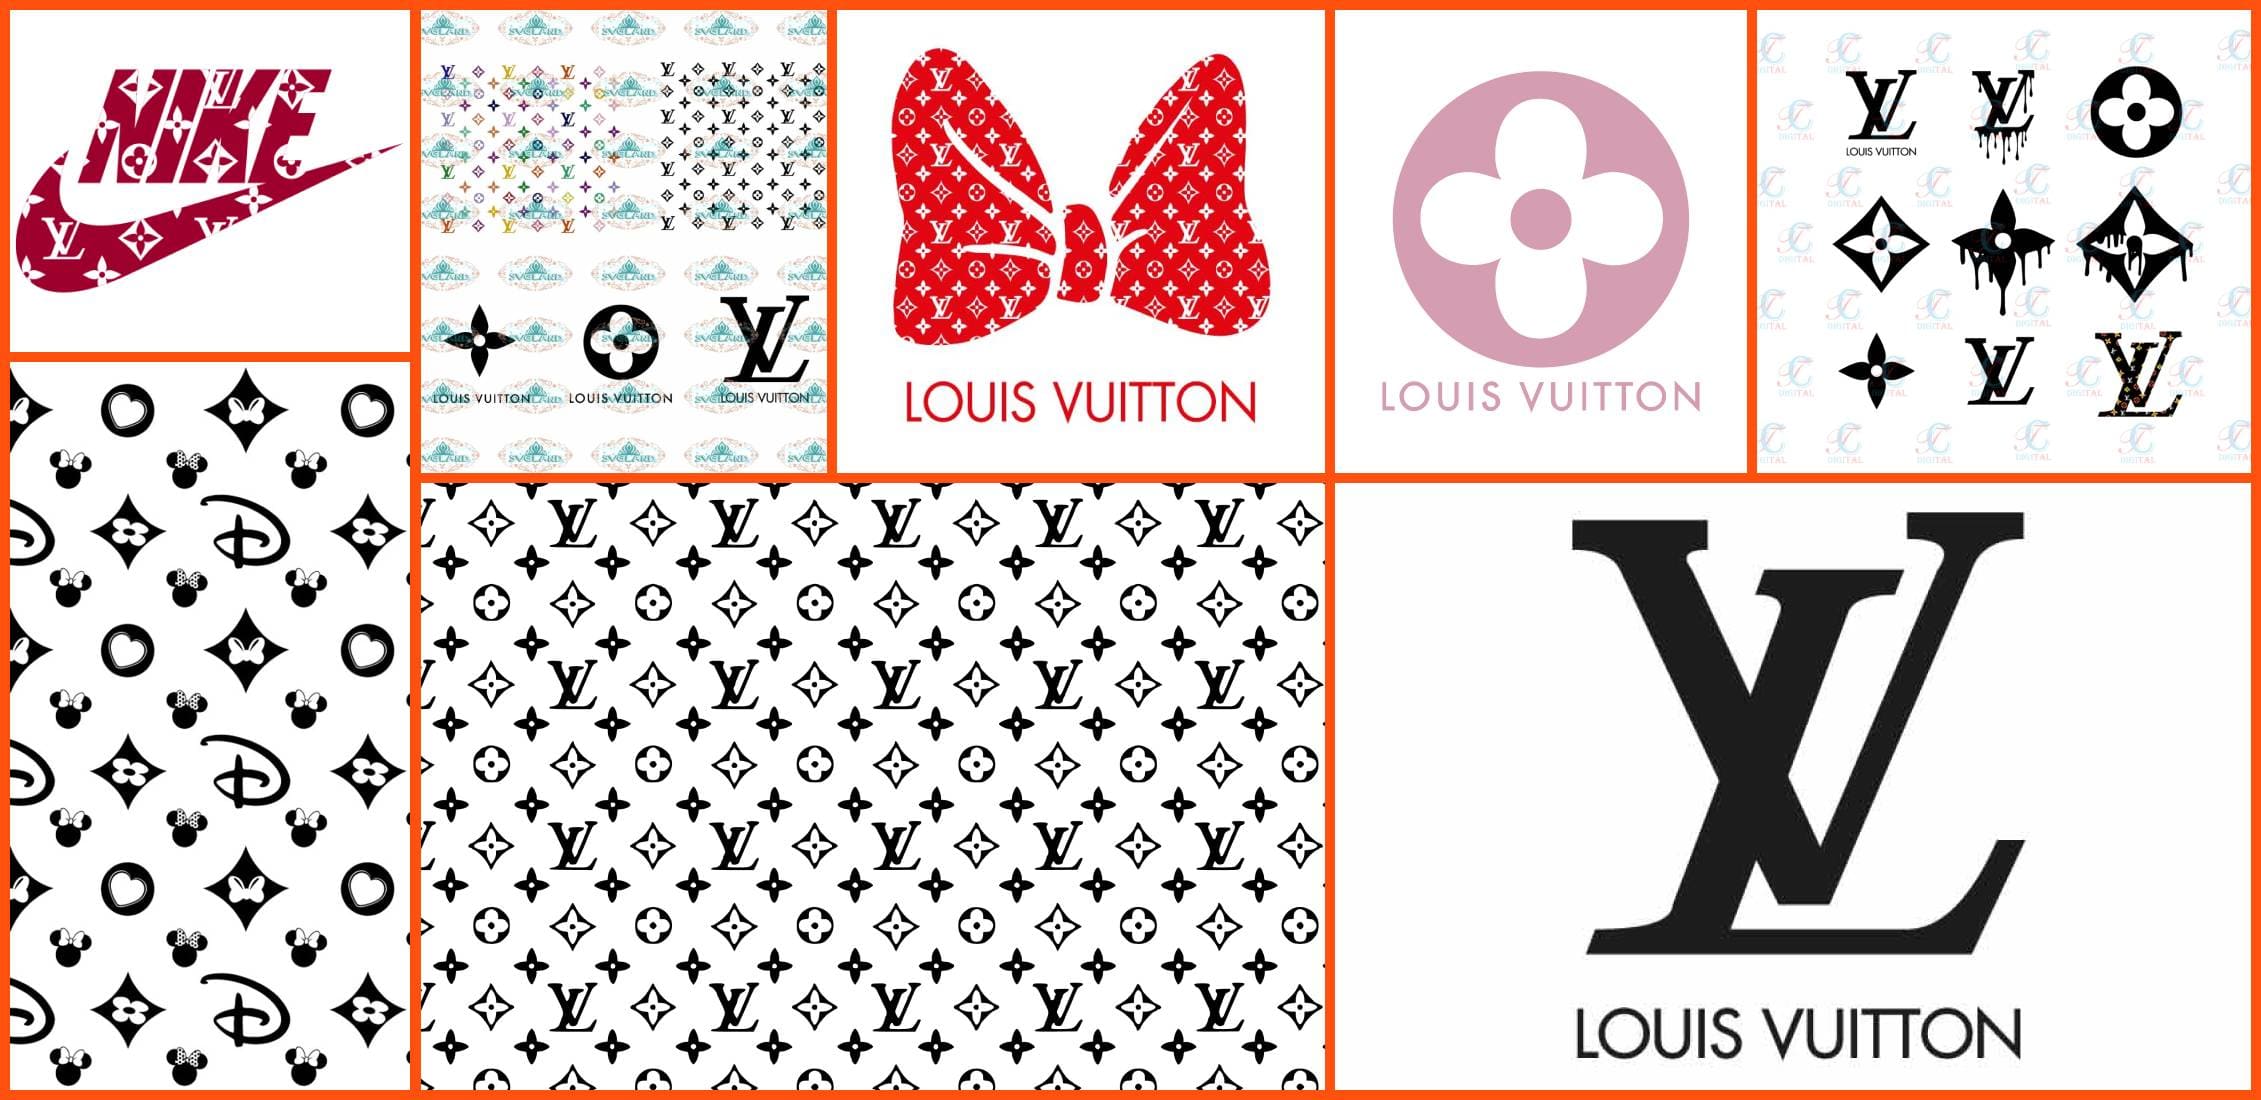 Louis Vuitton SVG Images Example.